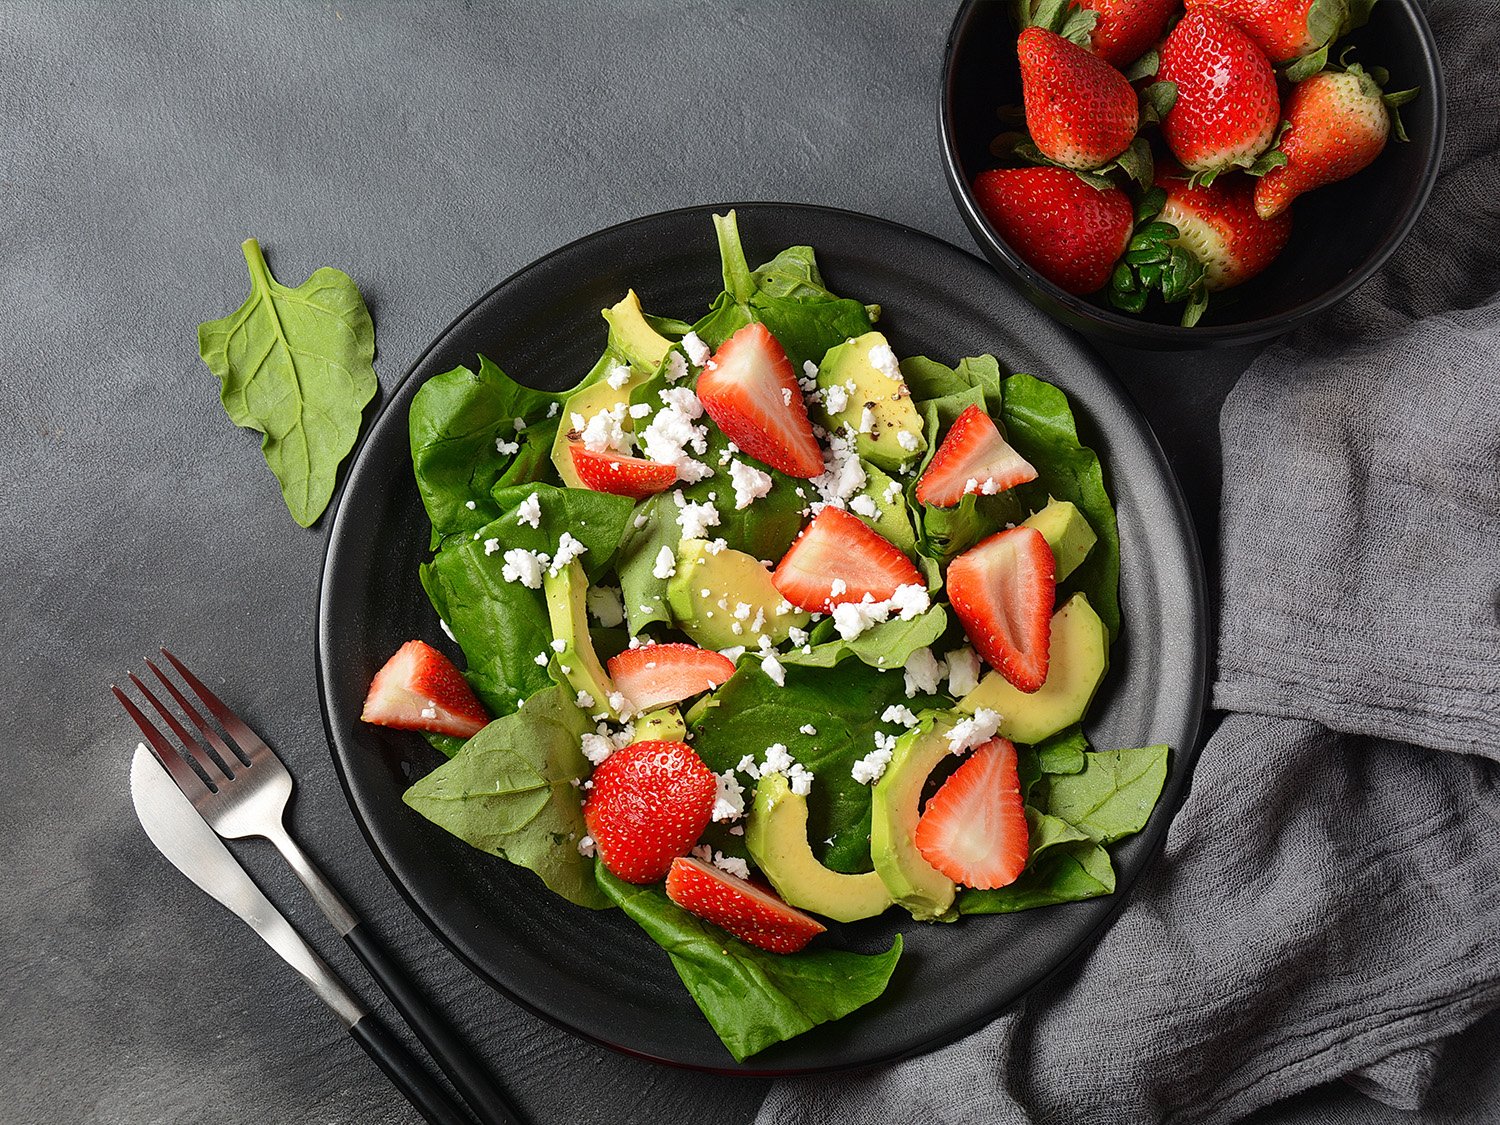 Idée recette d'été : salade sucrée-salée fraise, avocat,basilic, épinard